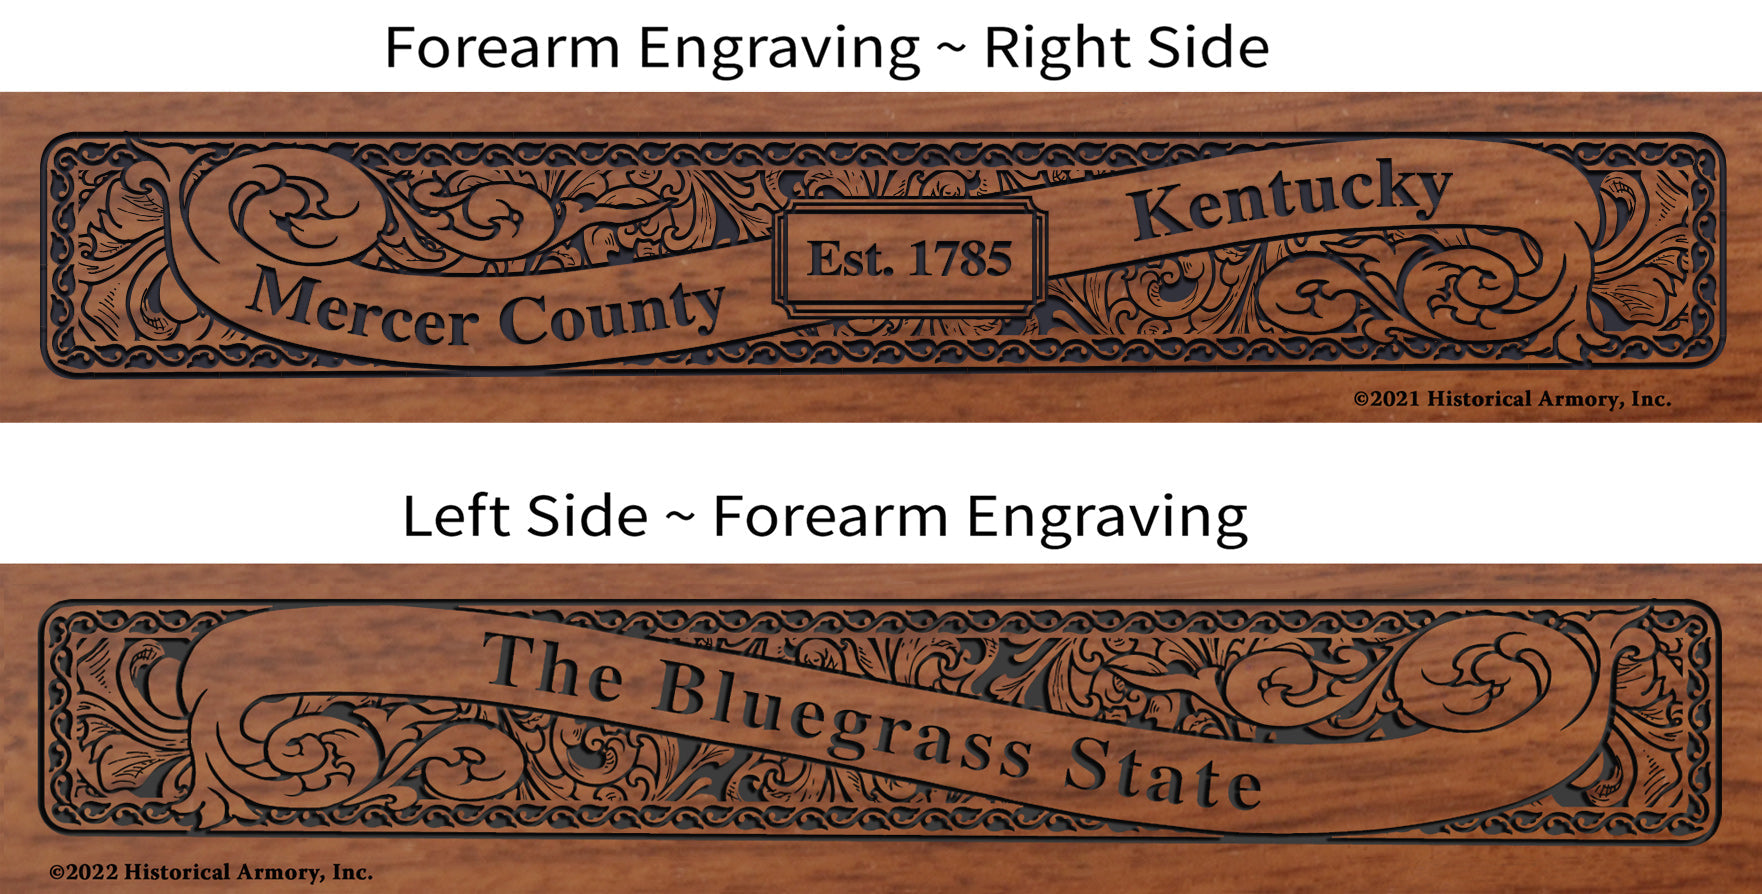 Mercer County Kentucky Engraved Rifle Forearm